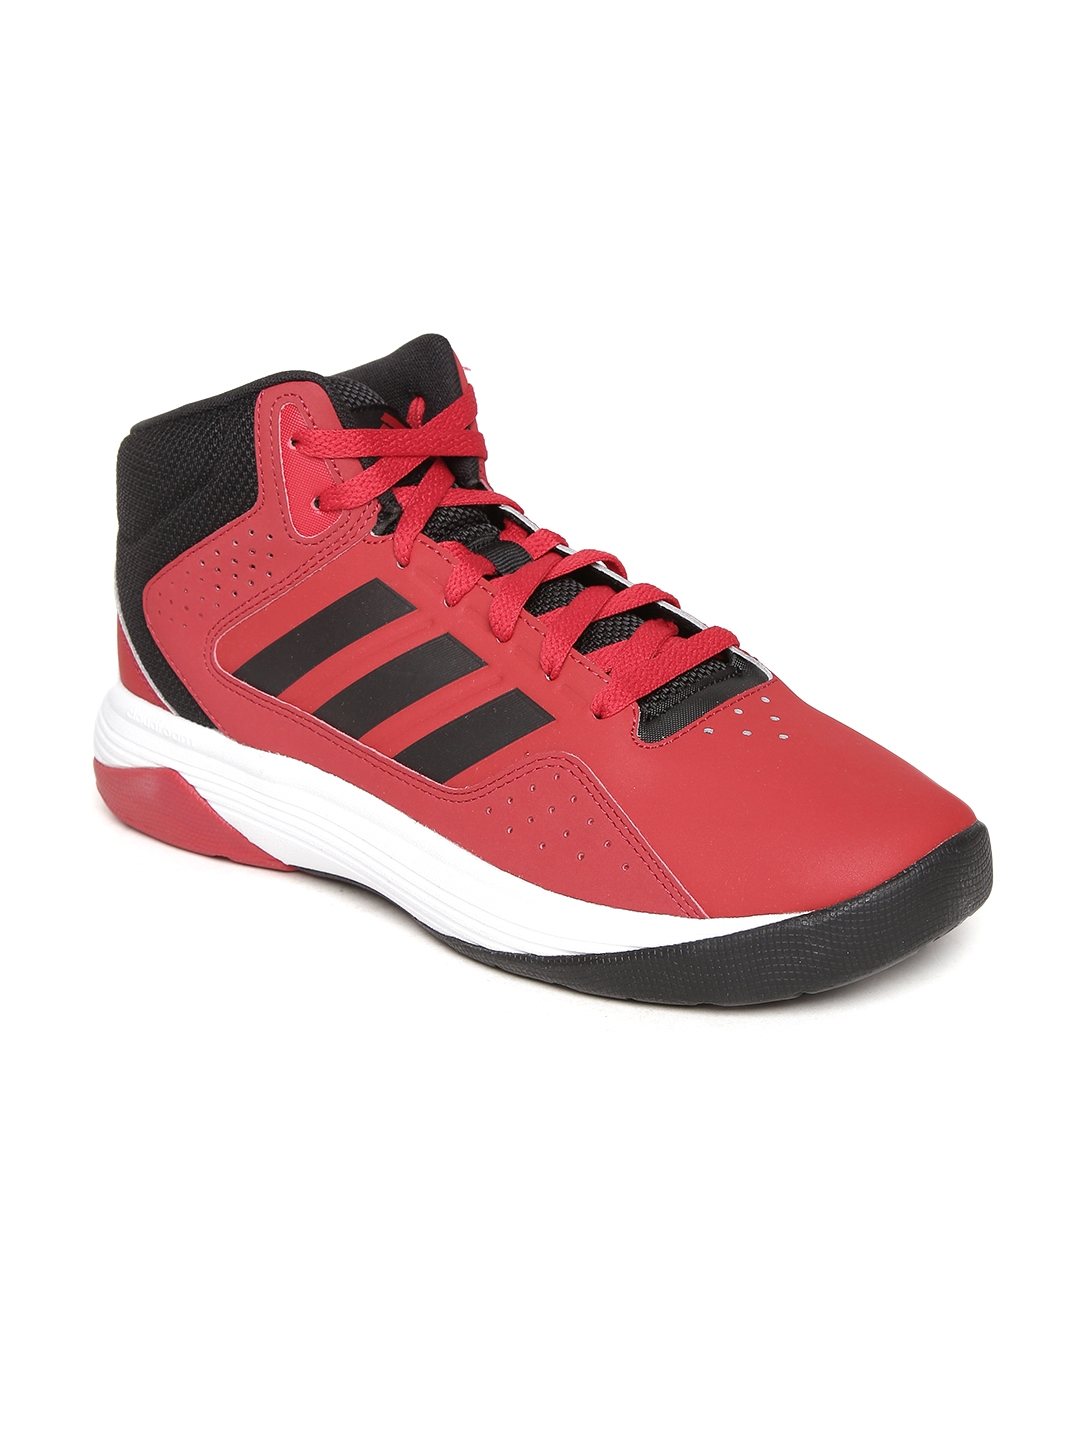 adidas cloudfoam ilation mid men's basketball shoes